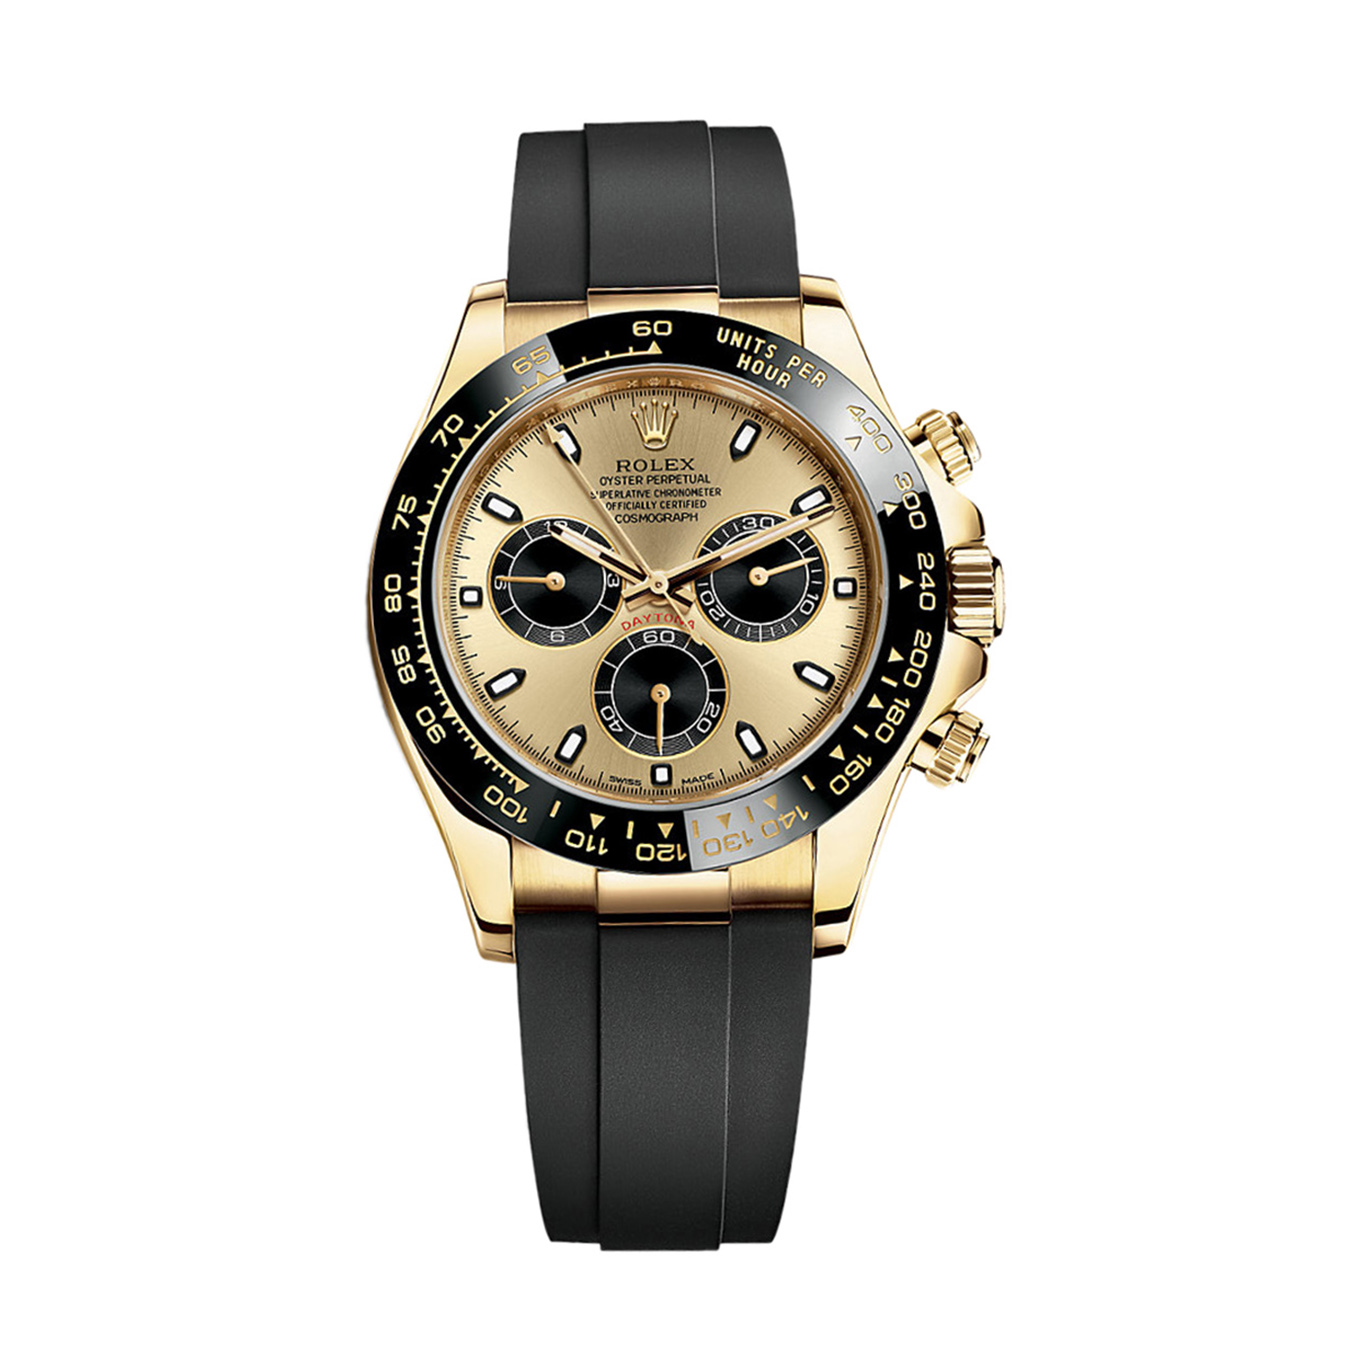 Cosmograph Daytona 116518LN Gold Watch (Champagne & Black)